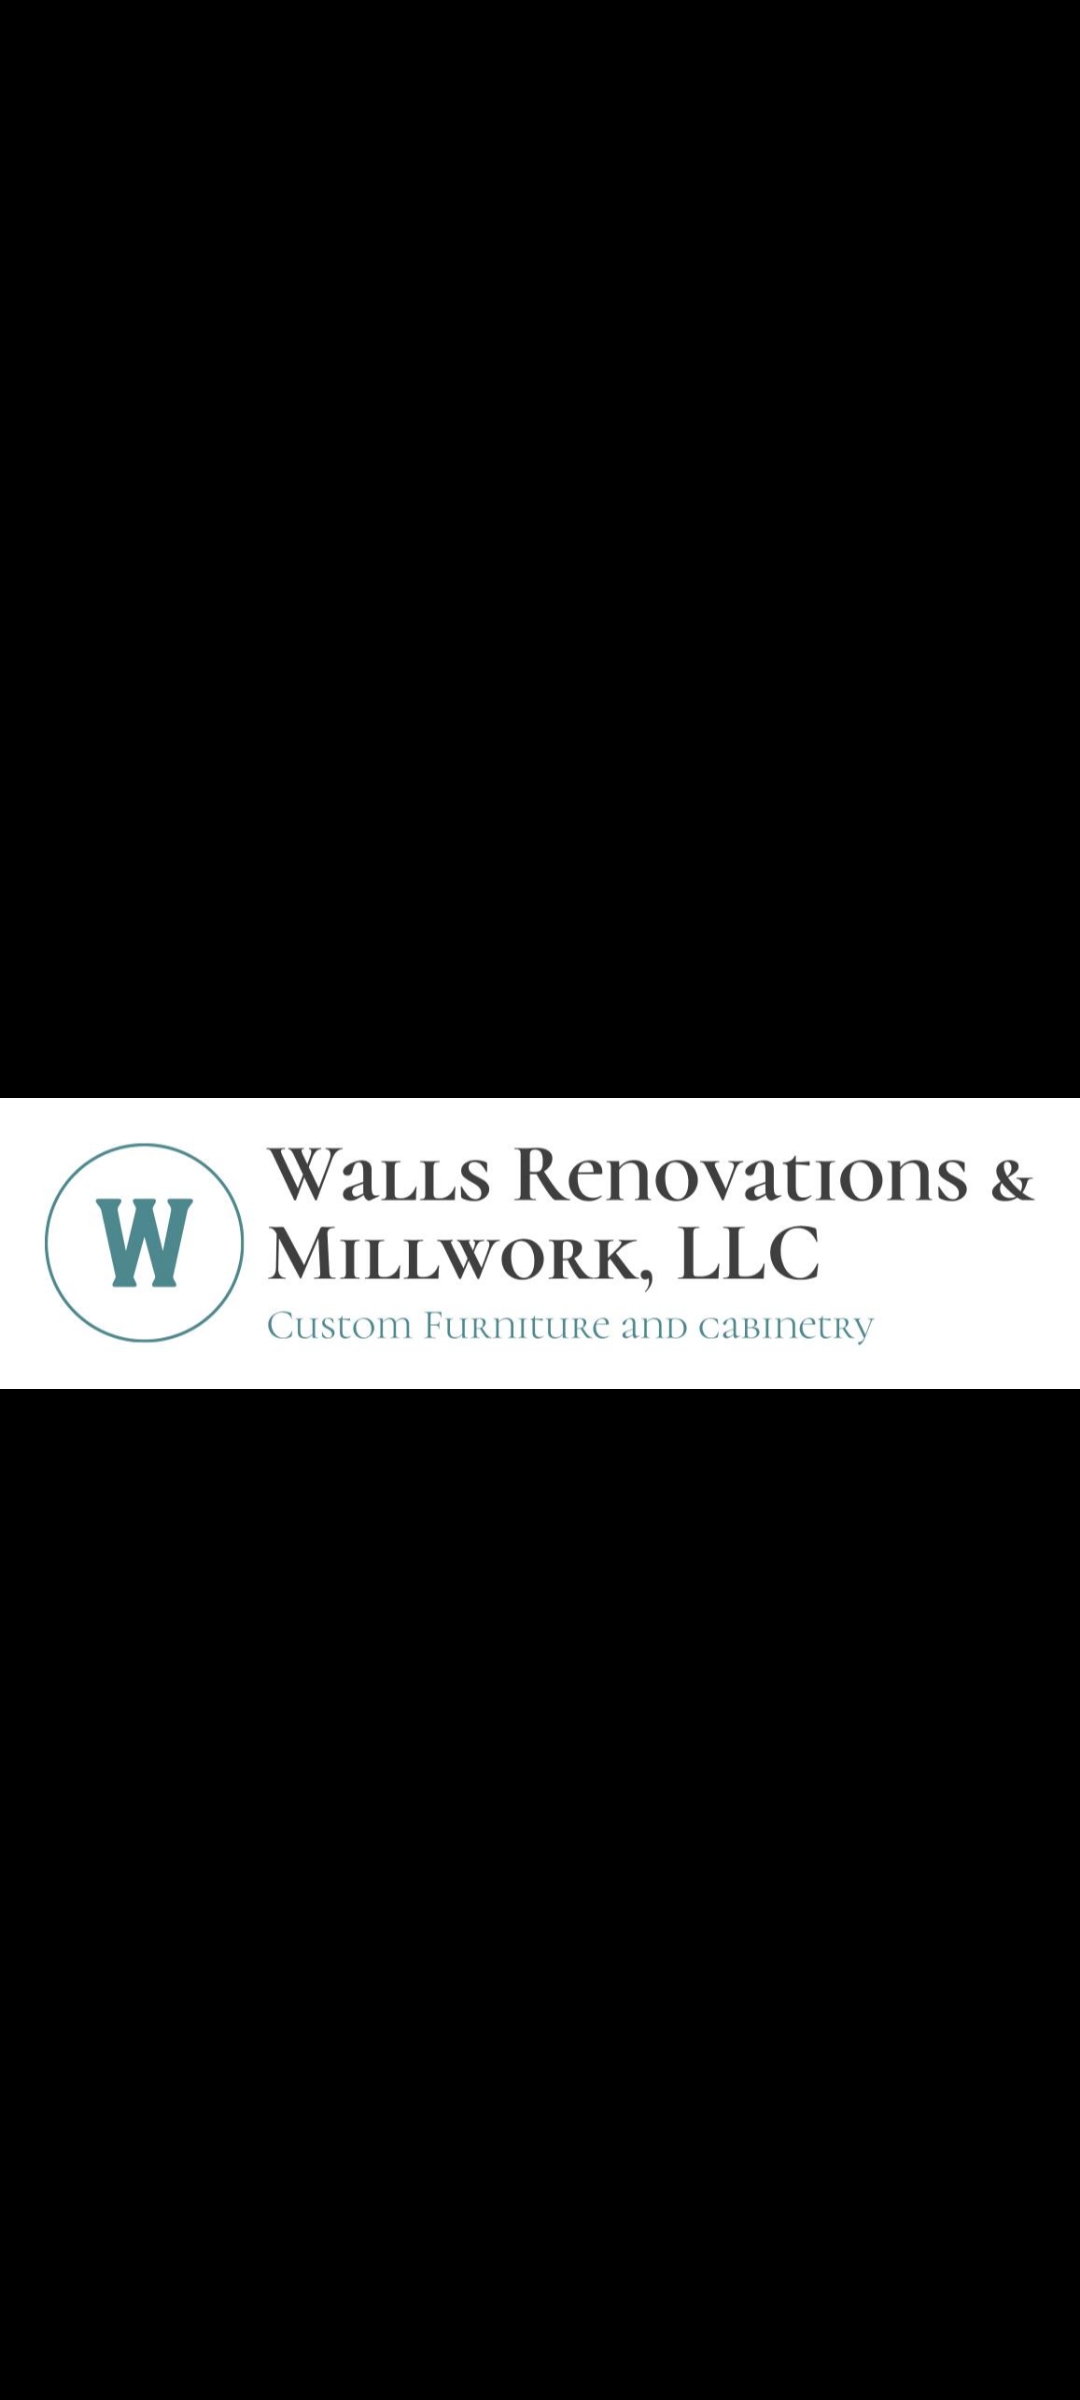 Walls Renovations & Millwork, LLC. Logo